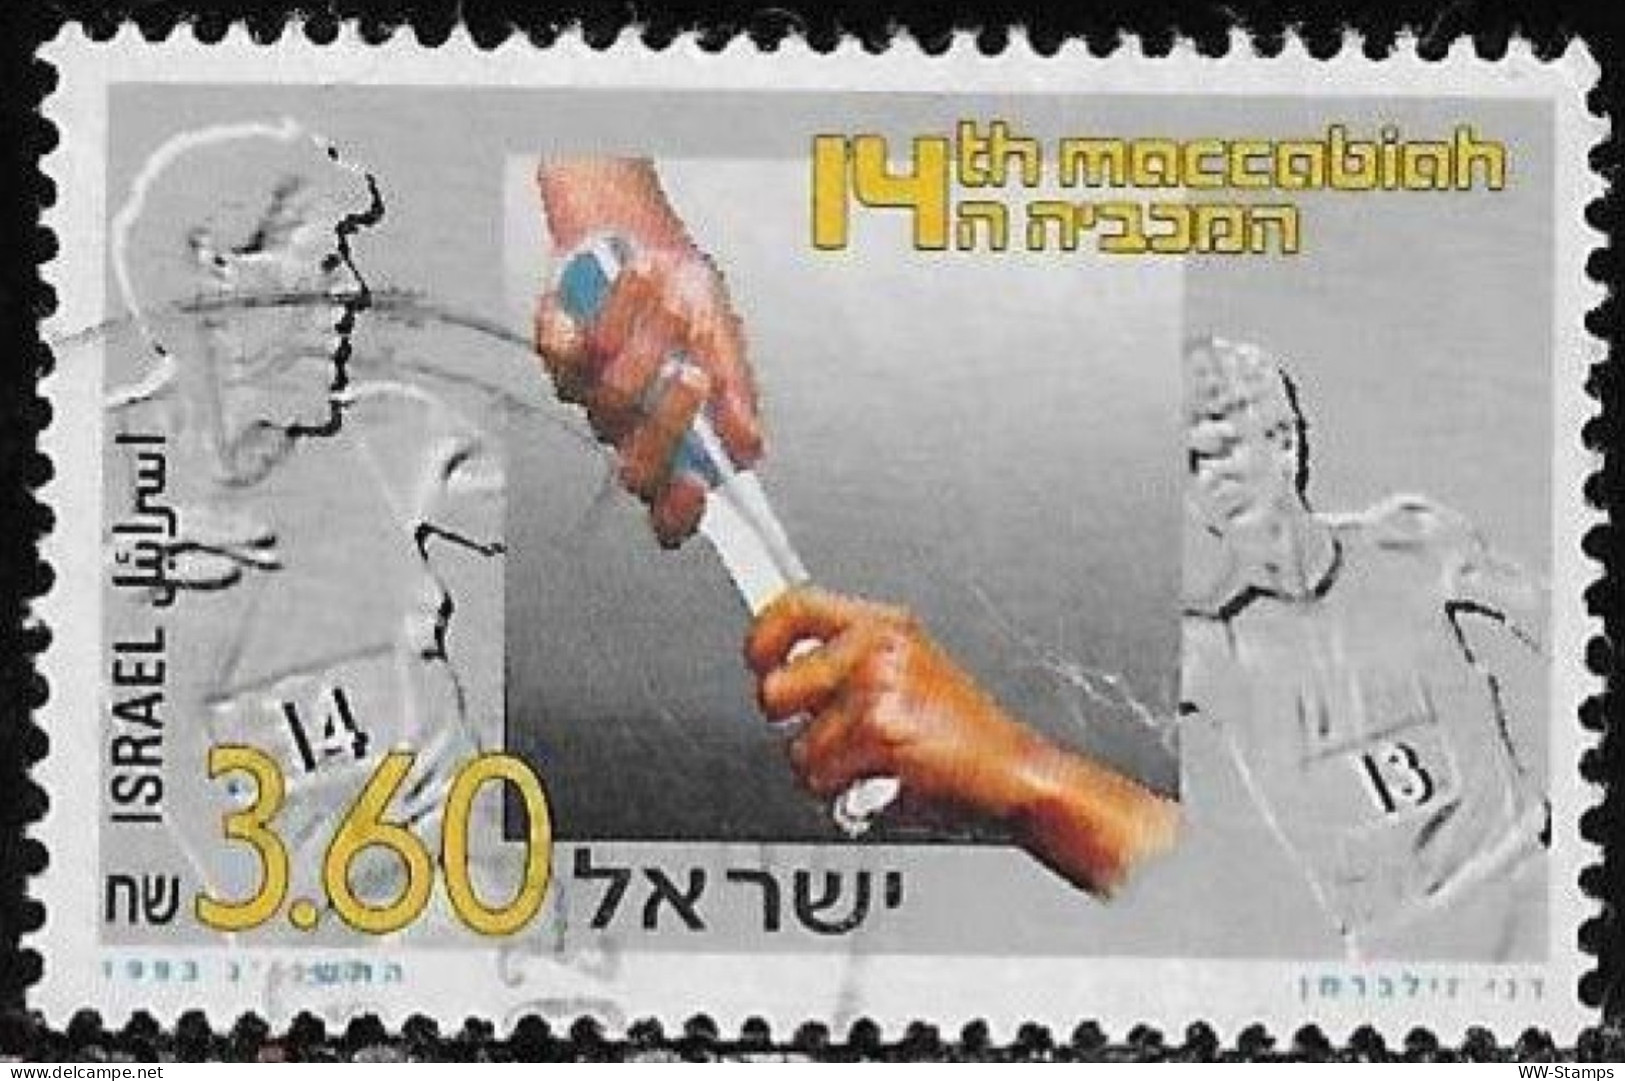 Israel 1993 Used Stamp The 14th Maccabiah Sports Games [INLT10] - Gebruikt (zonder Tabs)